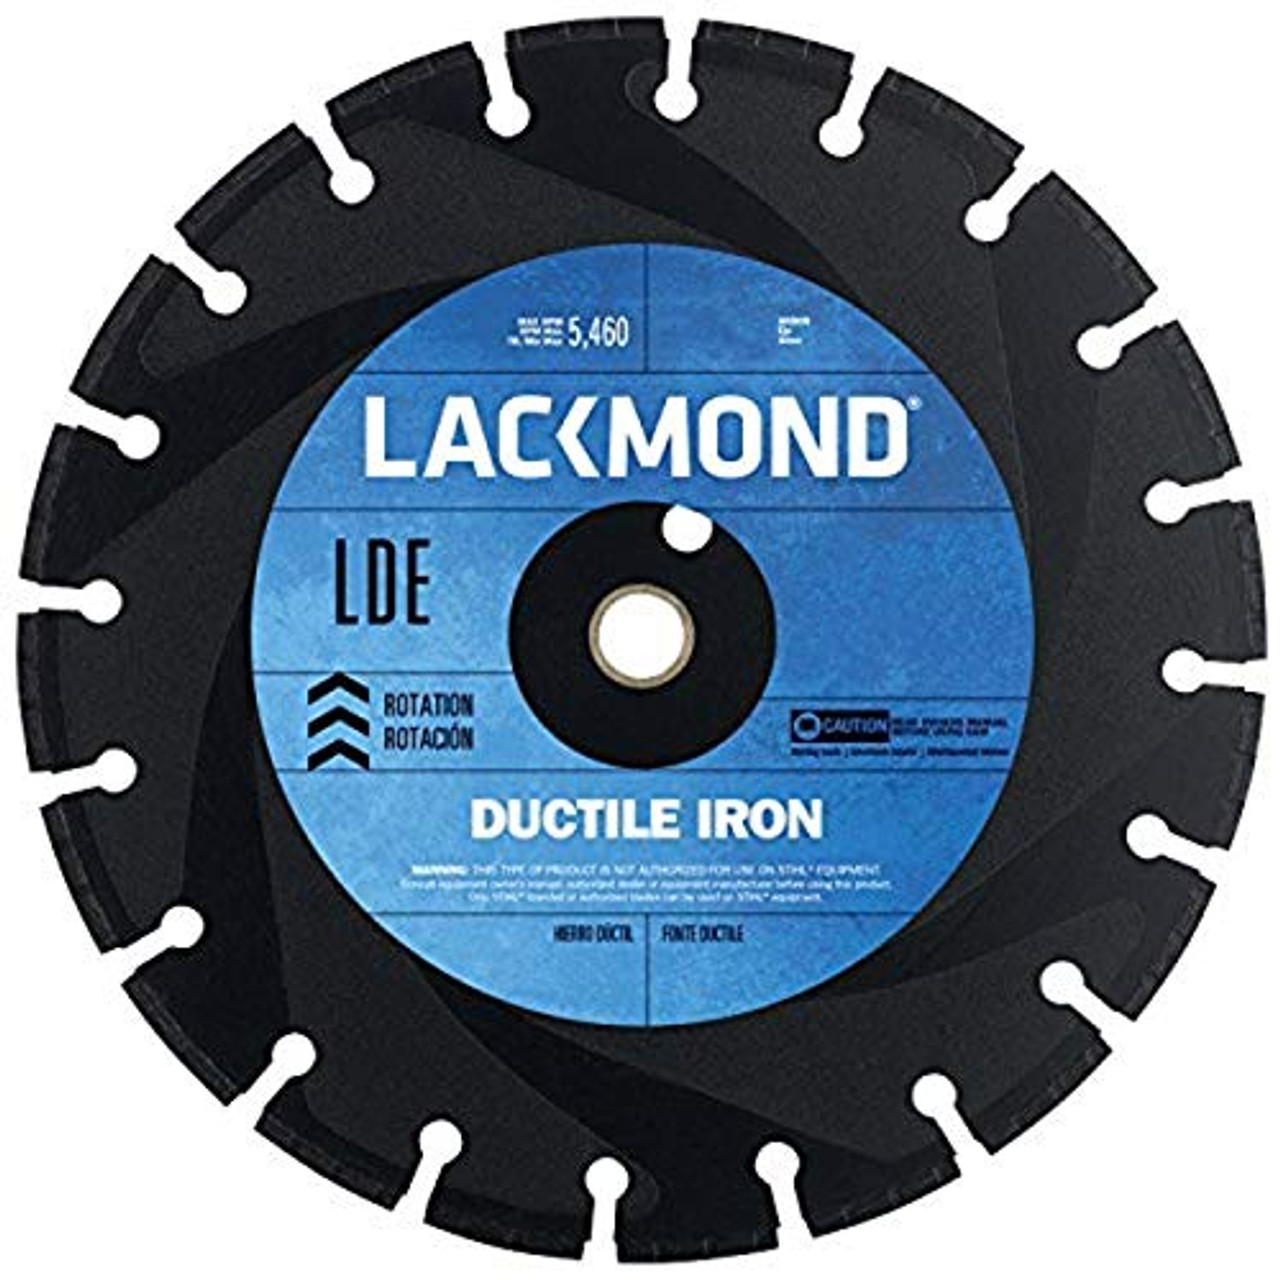 Lackmond LDE141251EP Ductile Iron Diamond Blade, 14"